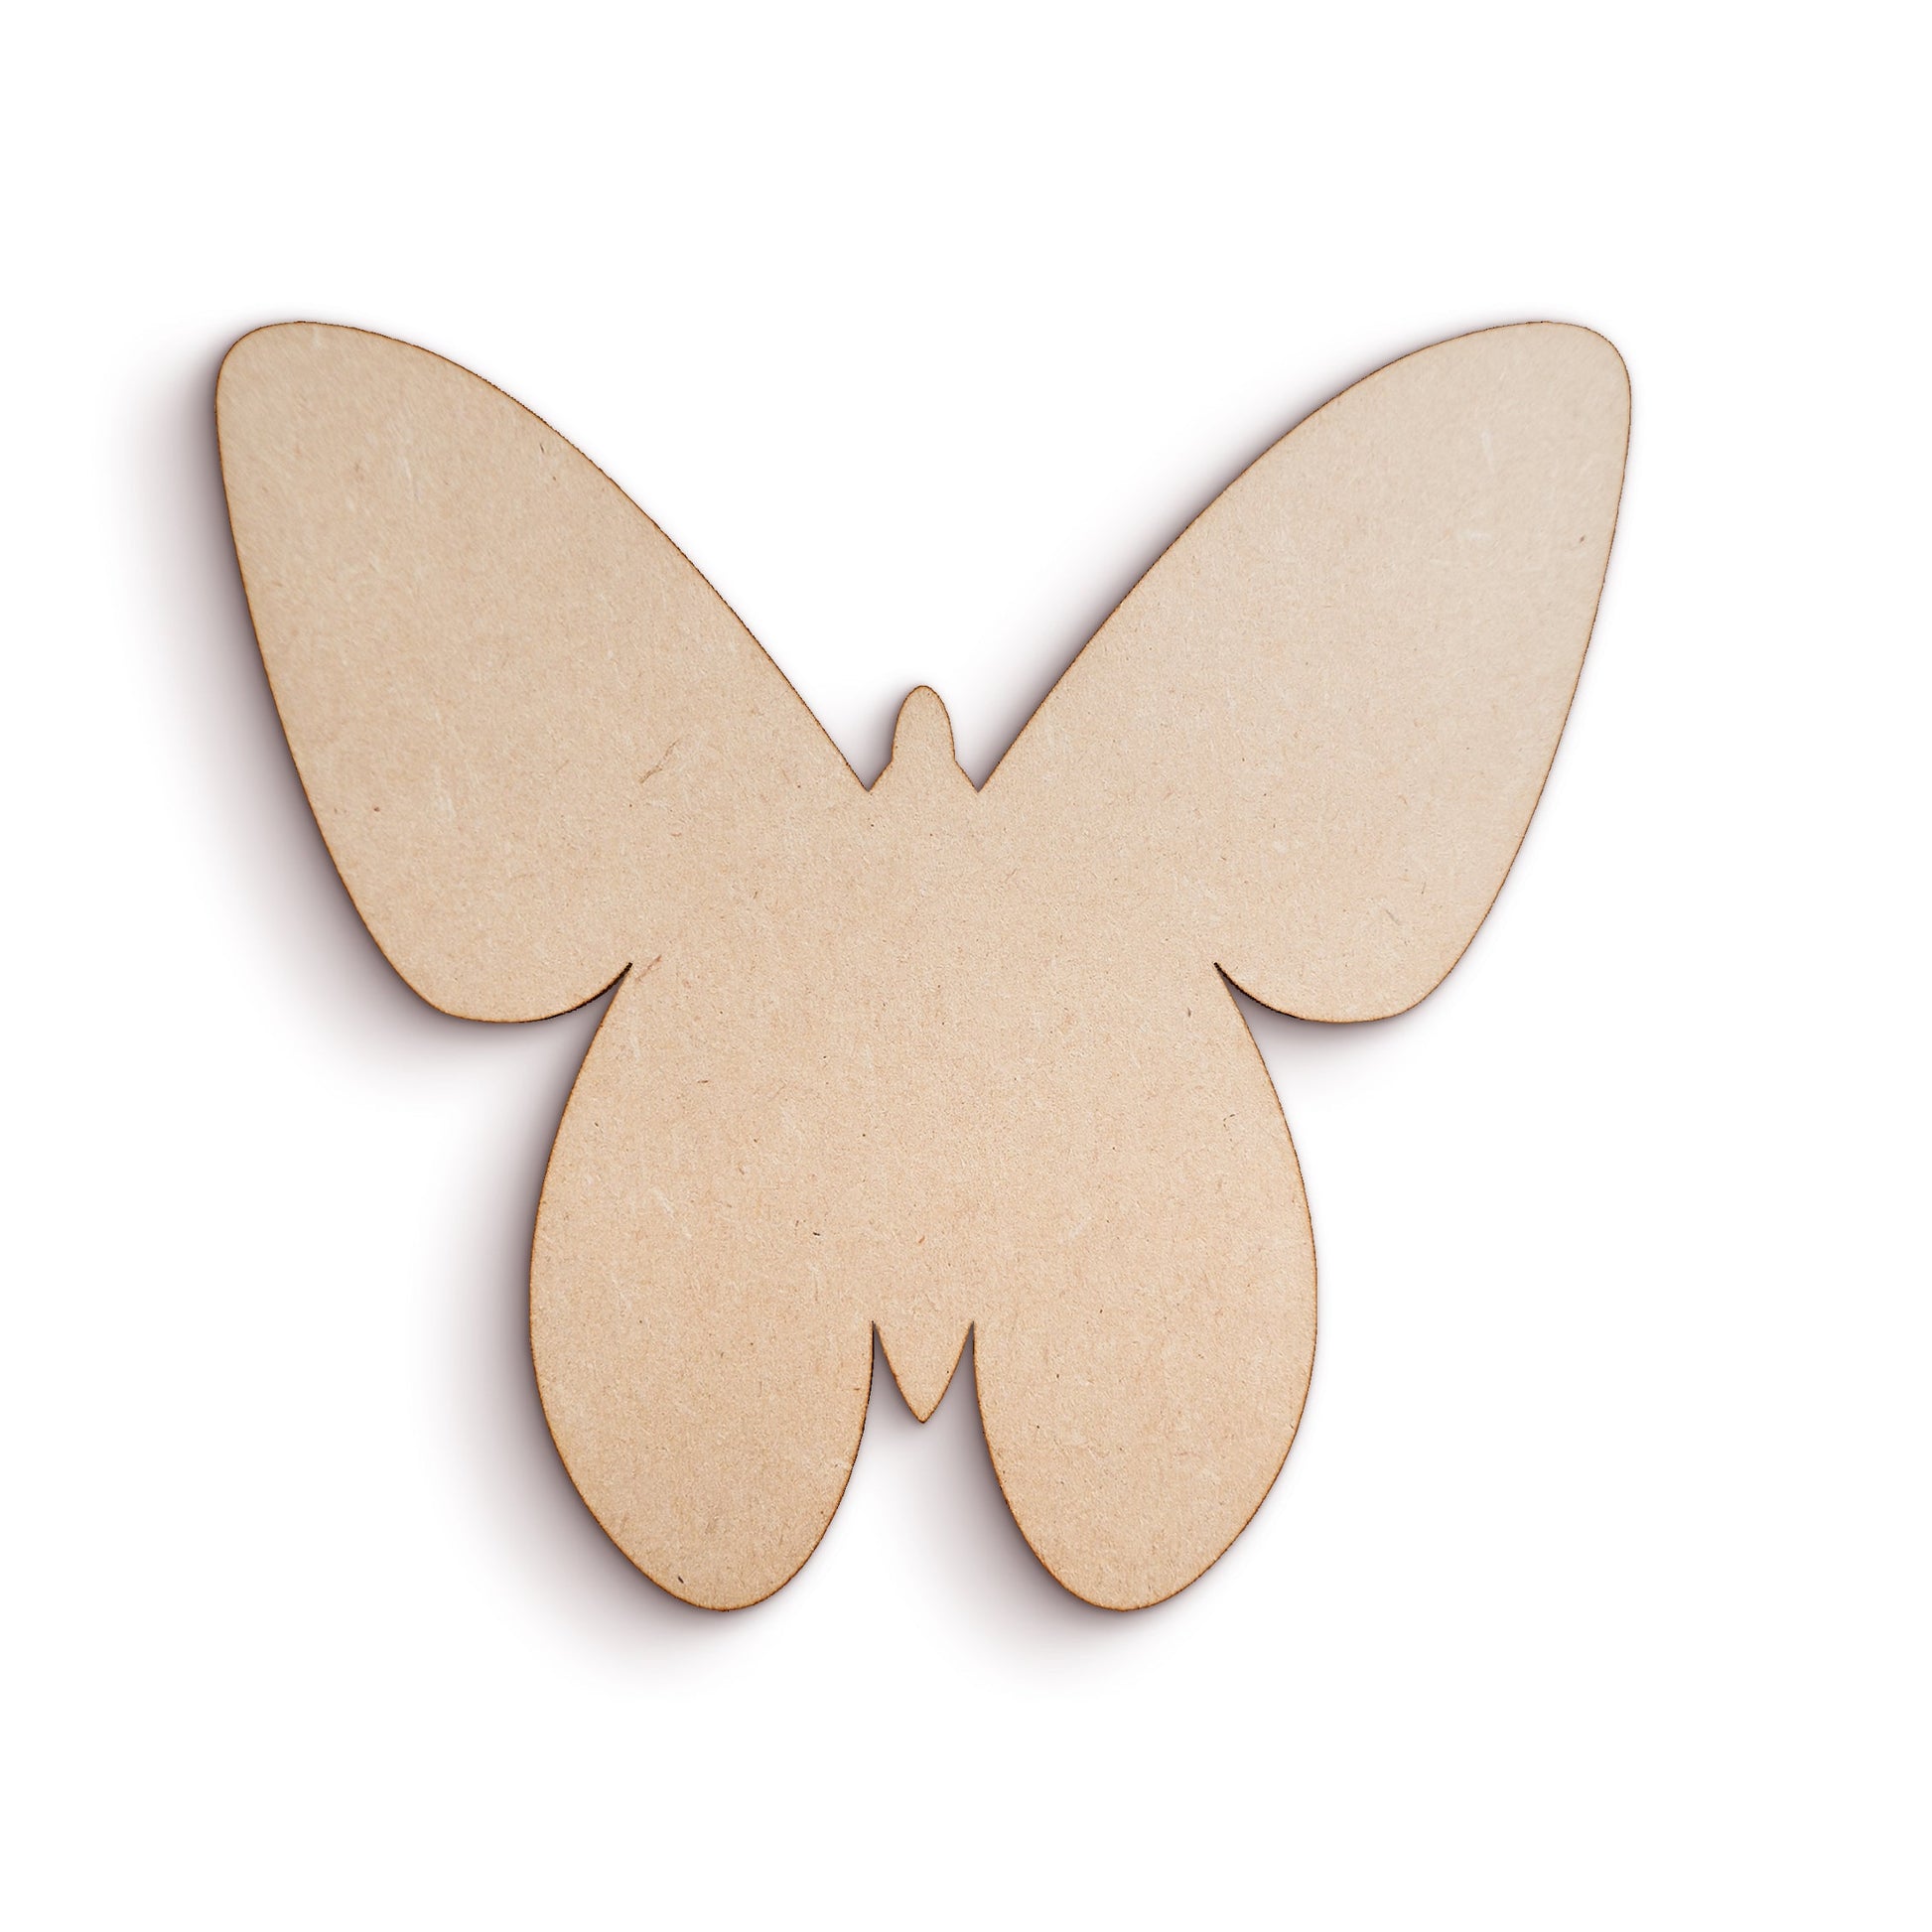 Butterfly wood craft shape SKU979722